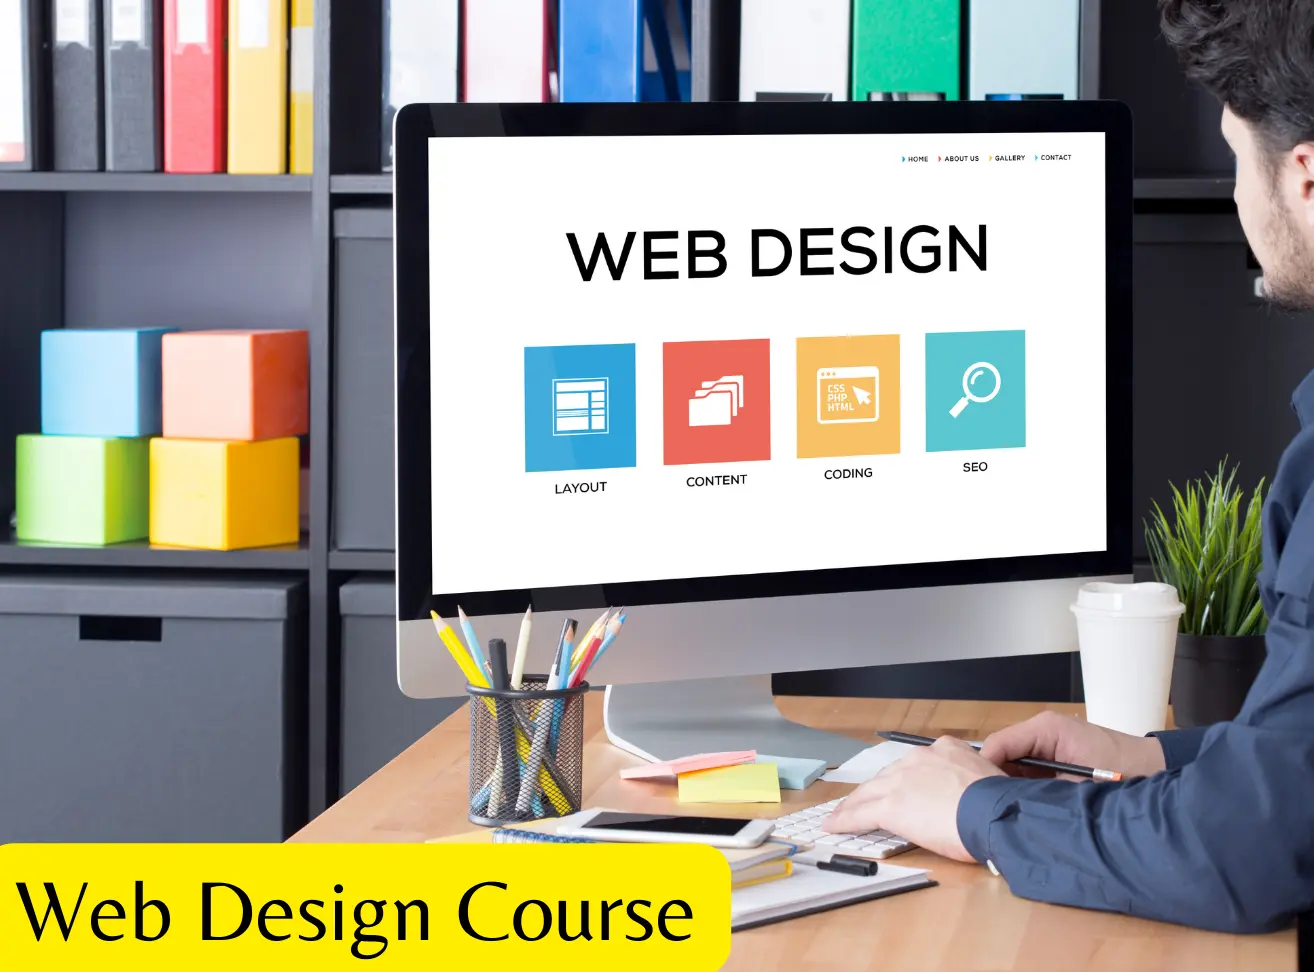 Web design course